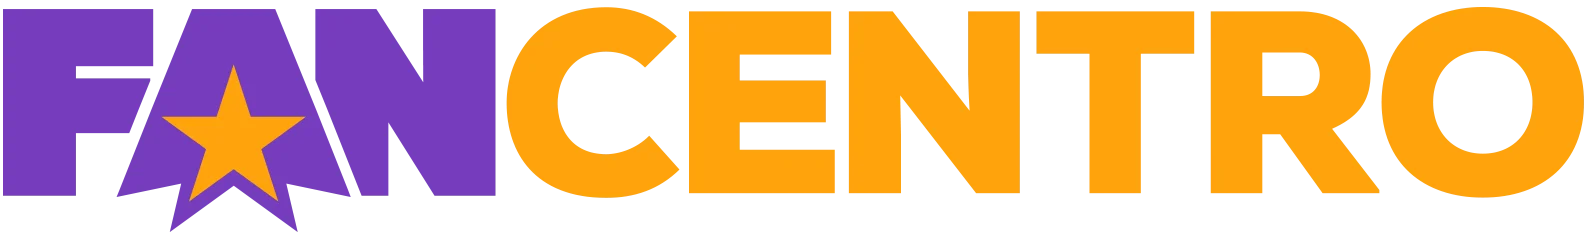 Logo Fancentro